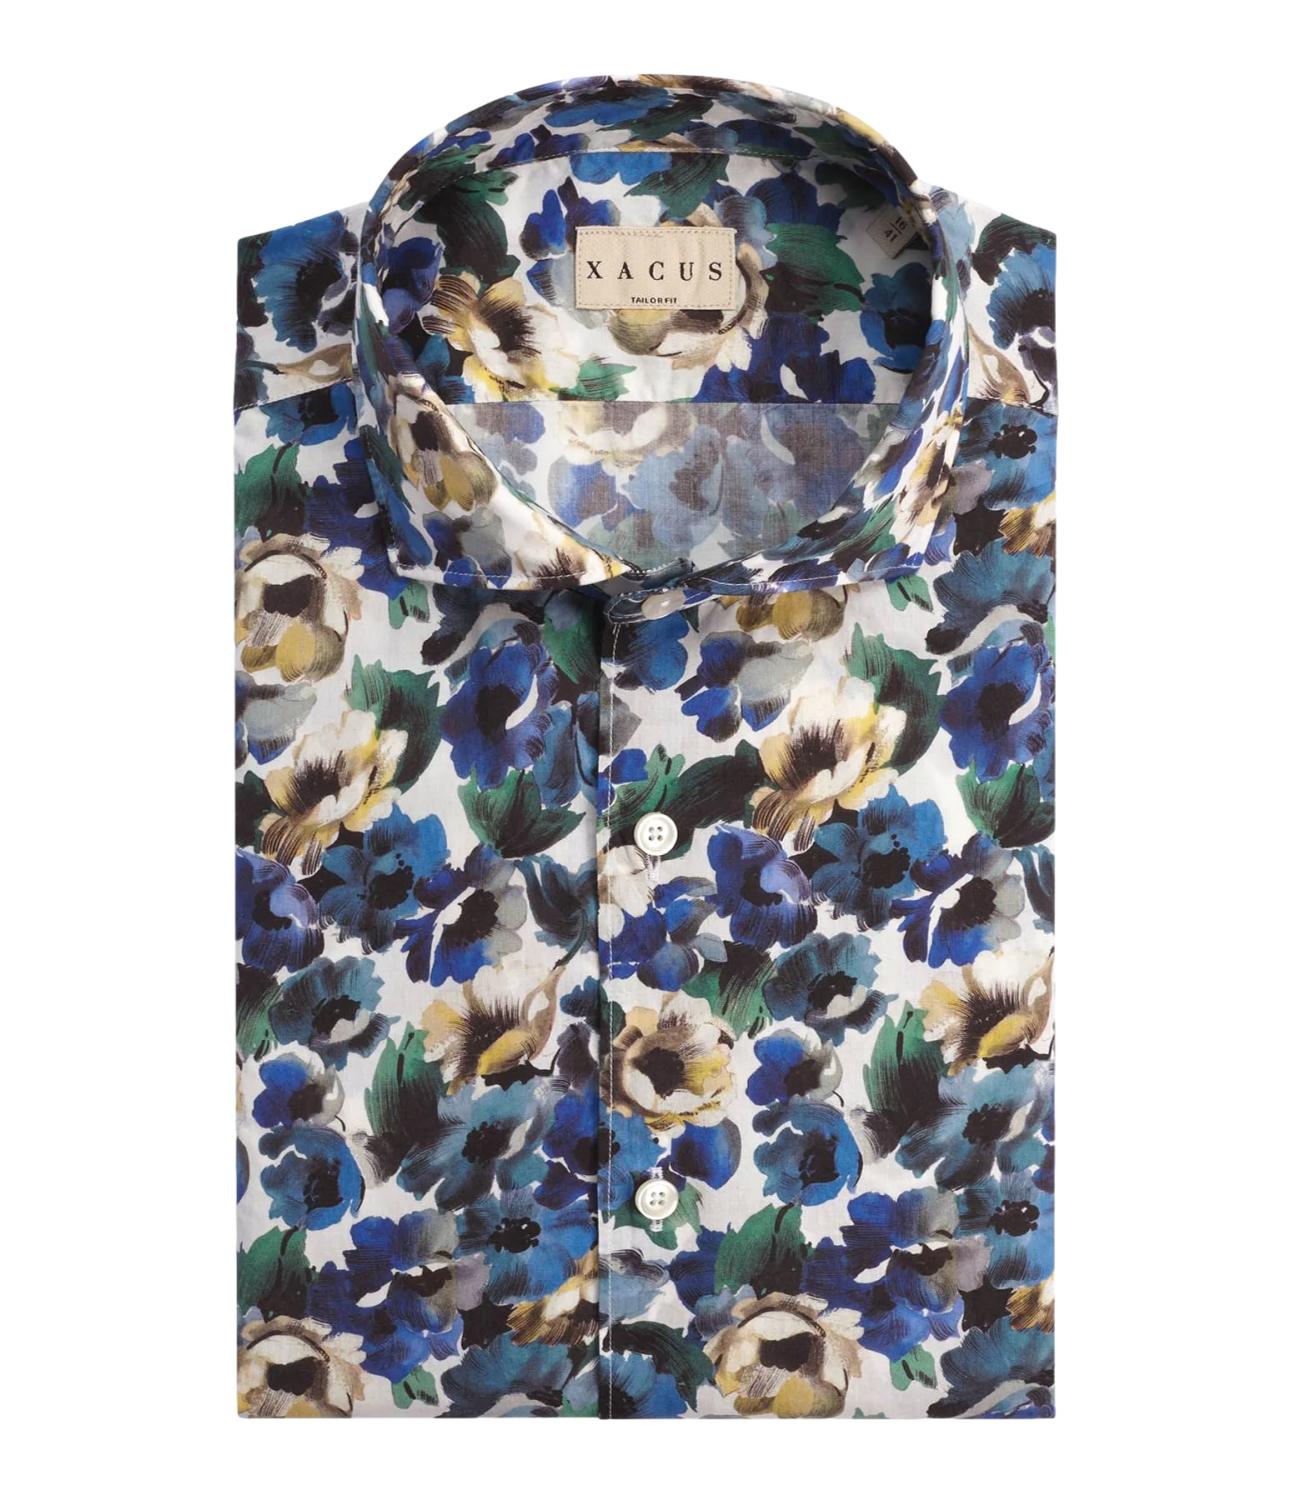 XACUS Men's floral patterned shirt